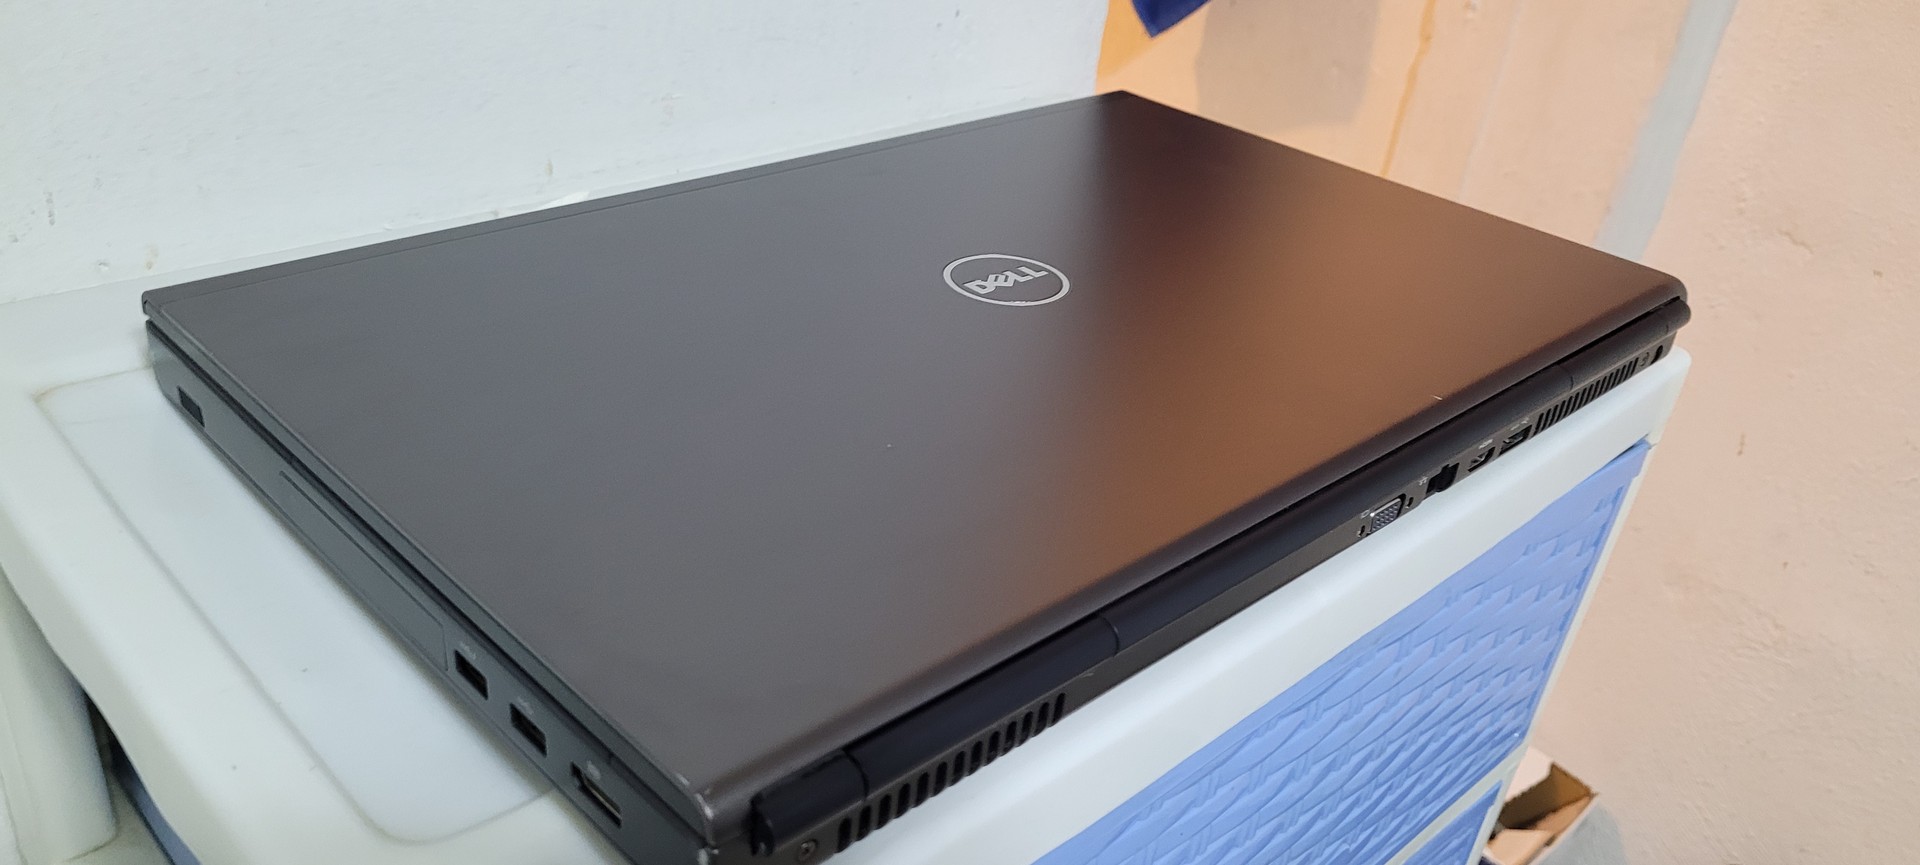 computadoras y laptops - Dell Precision m6800 17 Pulg Core i7 Ram 16gb Disco 1tb Nvidea 12gb Disponible 2